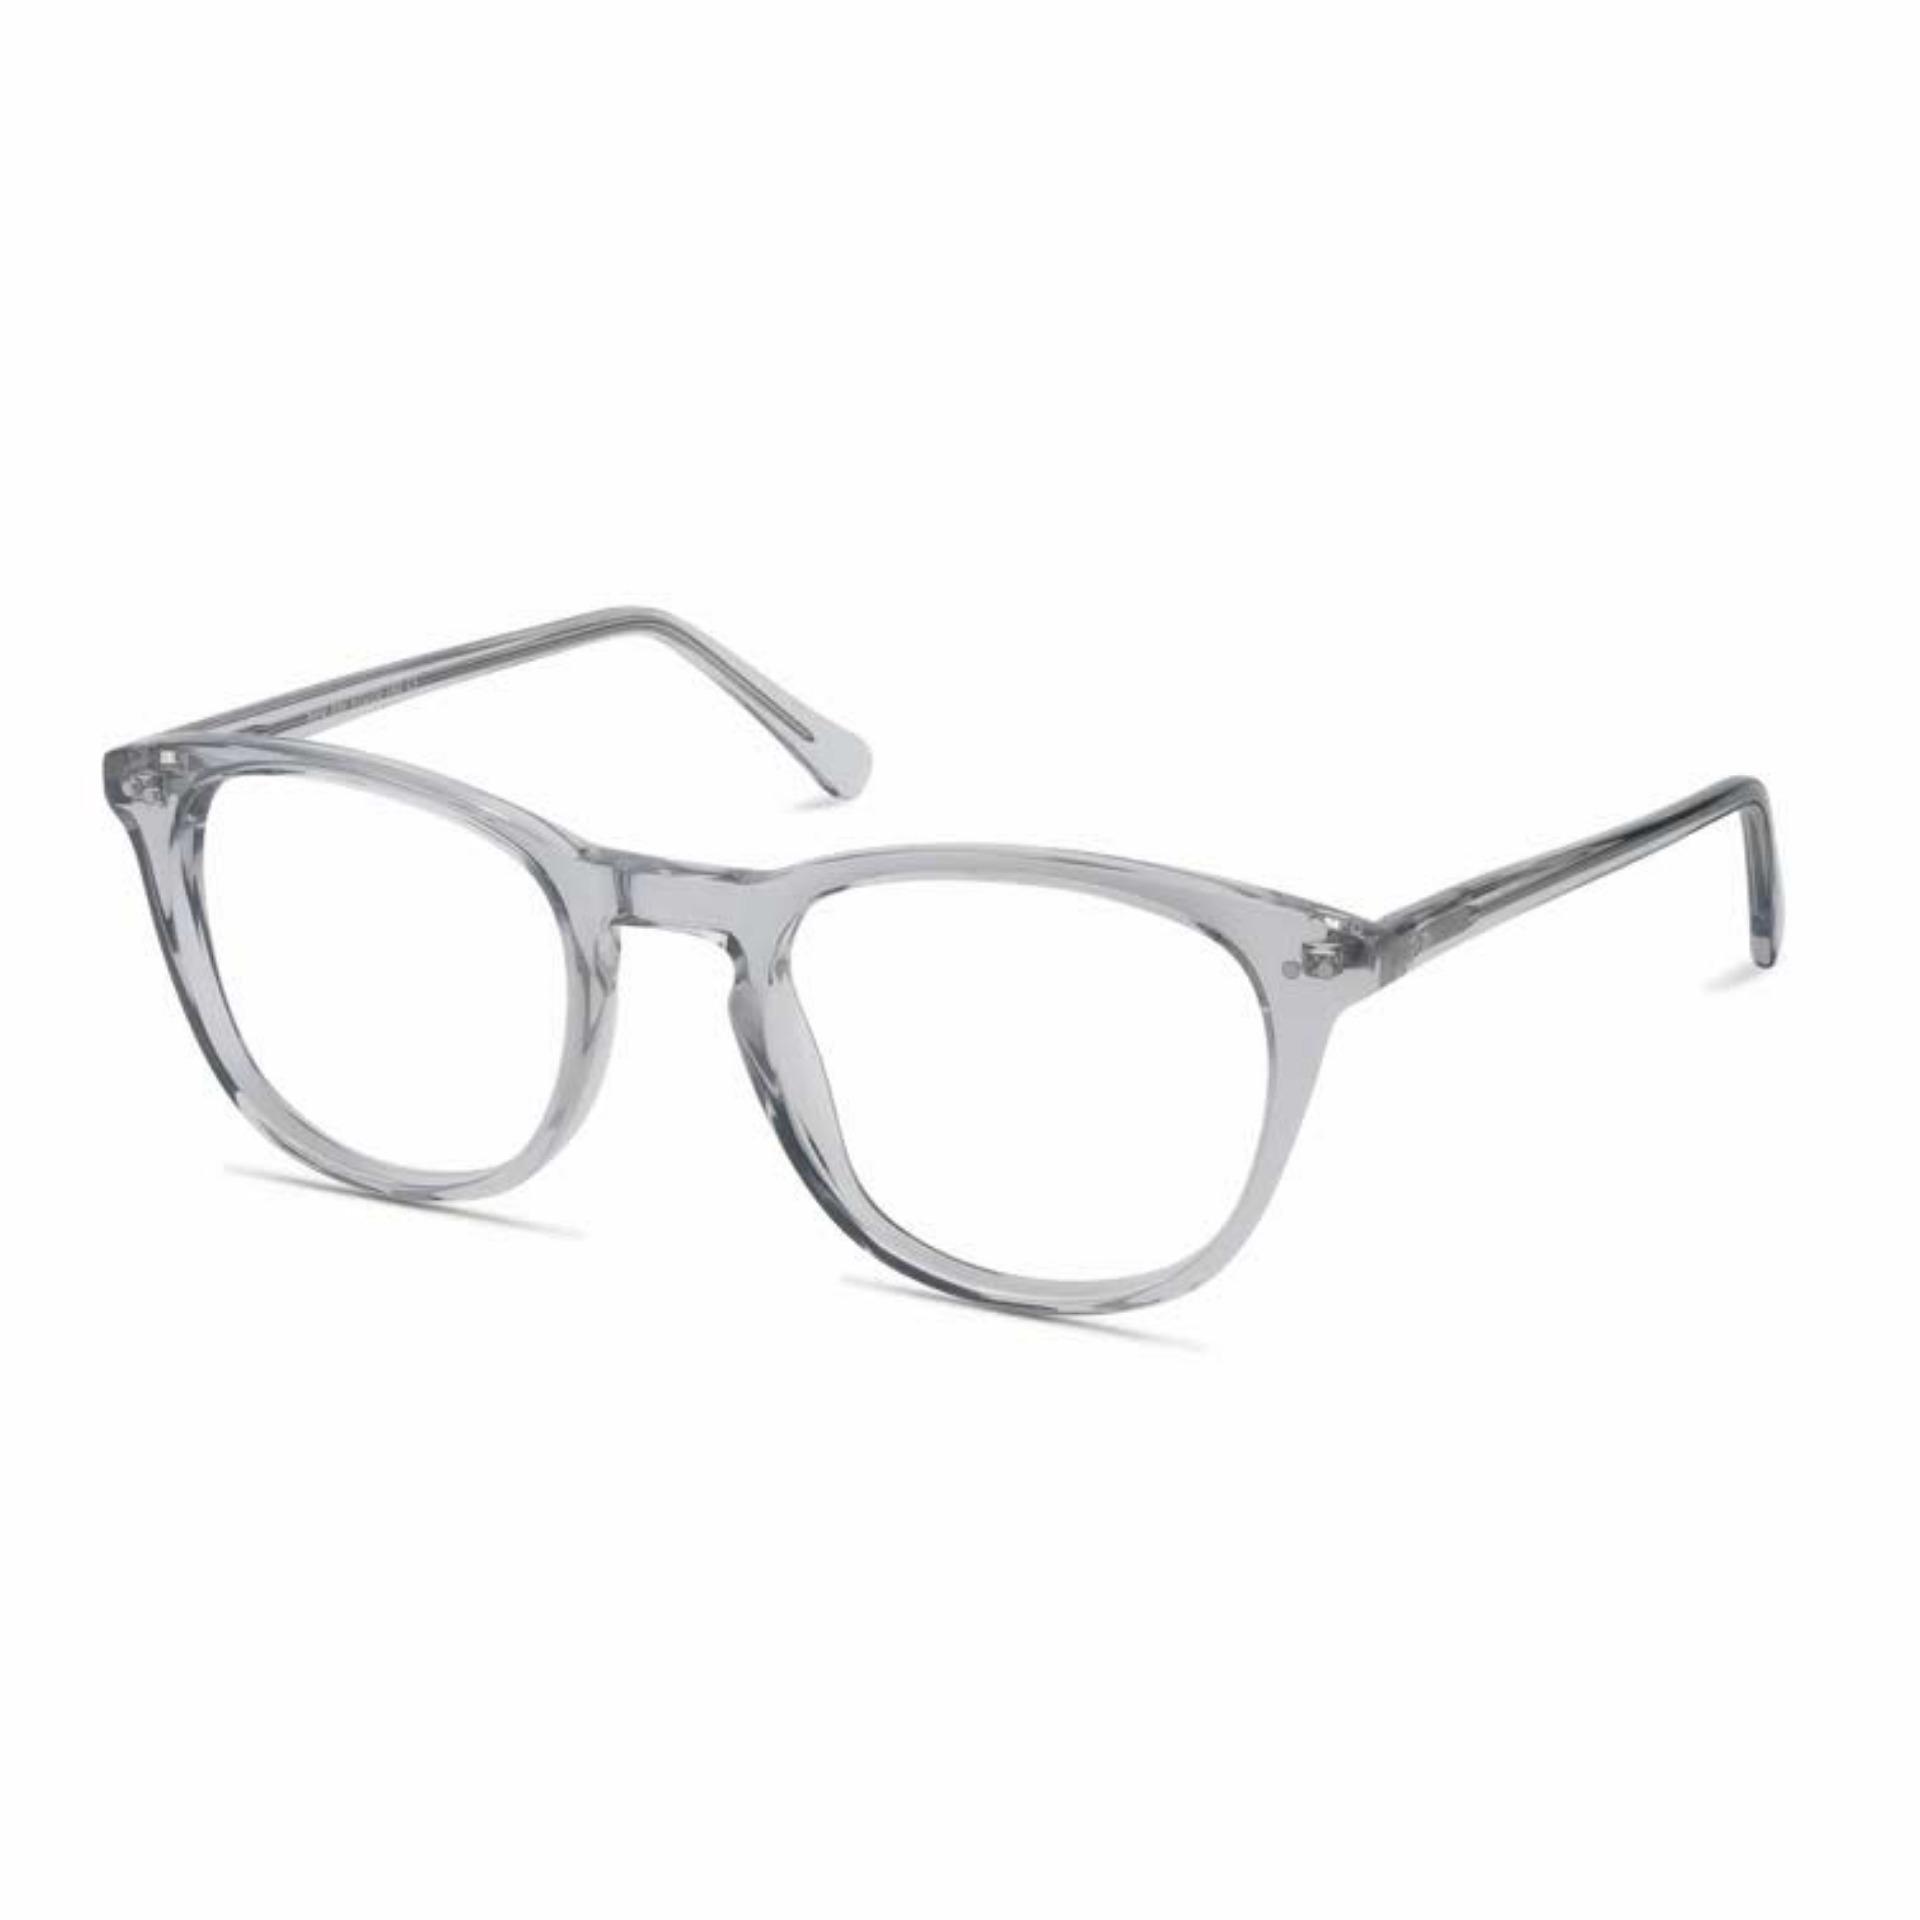 Korea Fashion Style - Kacamata Oval - Fashion - Pria dan Wanita - Unisex - Clasic Round Glasses